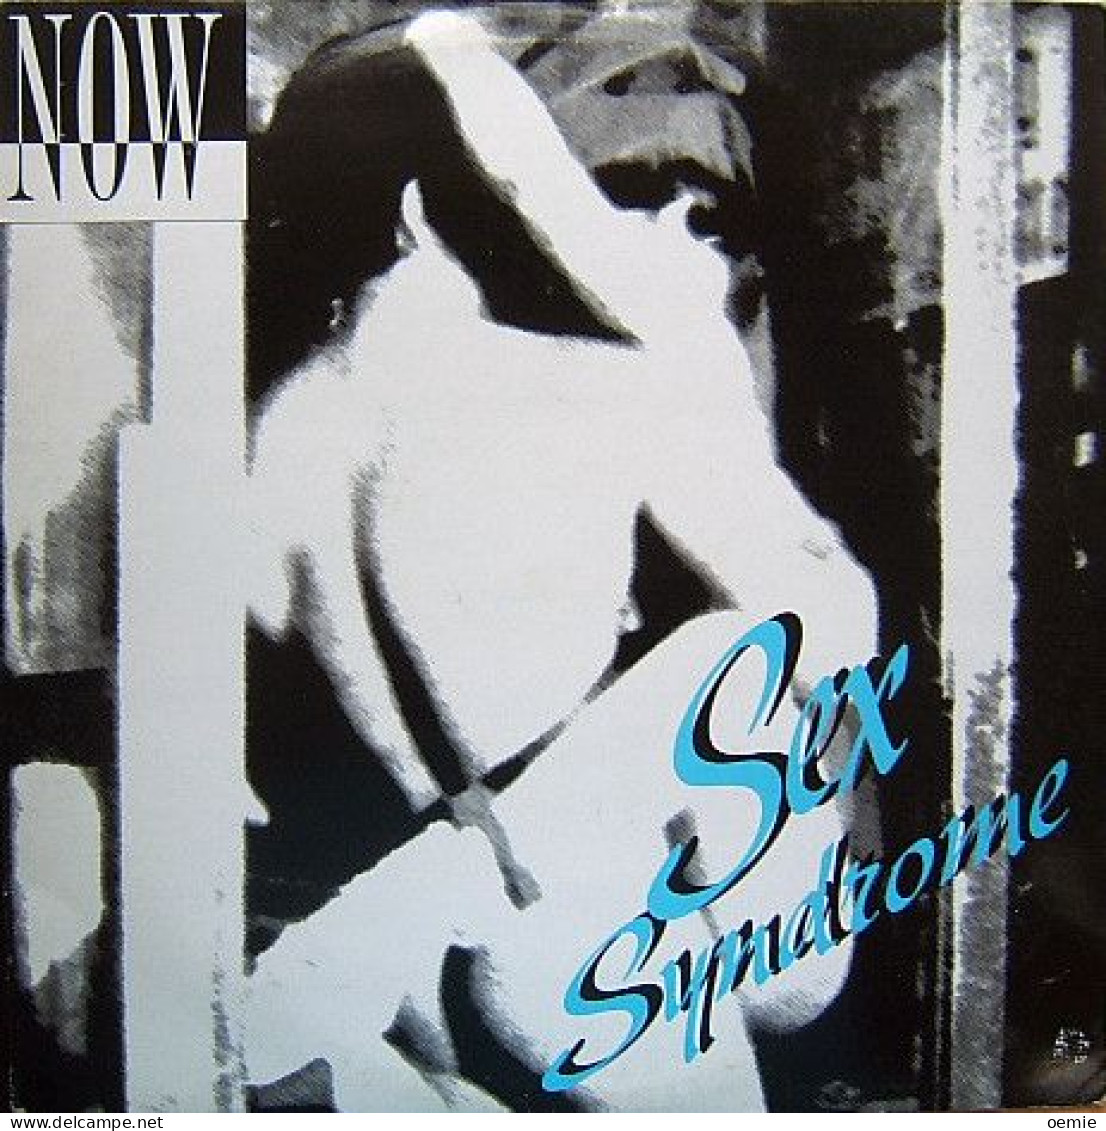 NOW  SEX SYNDROME - 45 Toeren - Maxi-Single